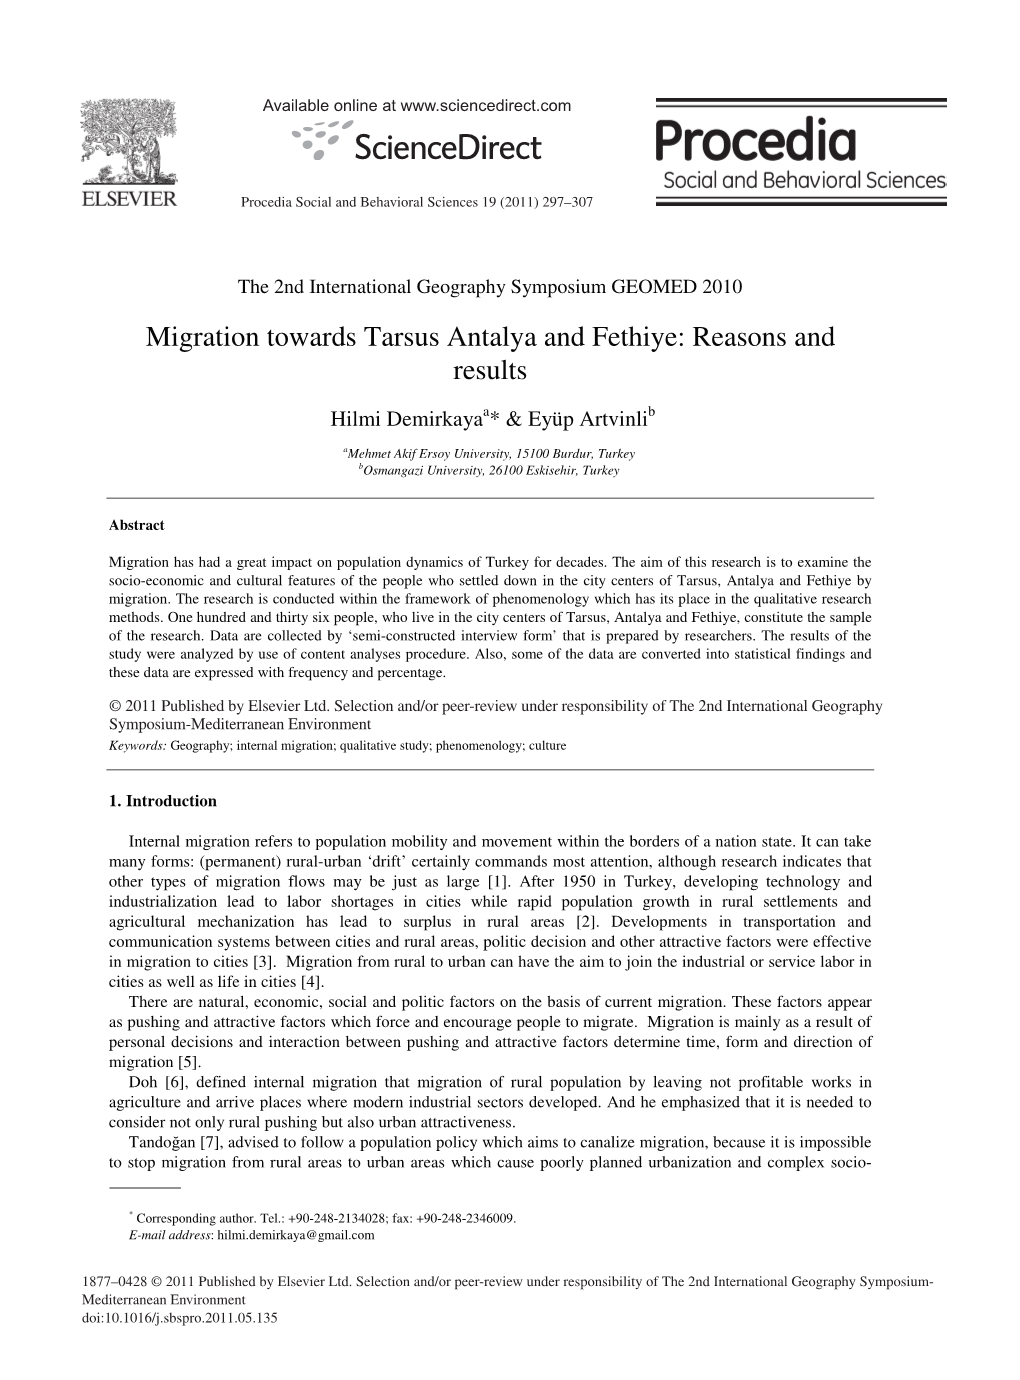 Migration Towards Tarsus Antalya and Fethiye: Reasons and Results